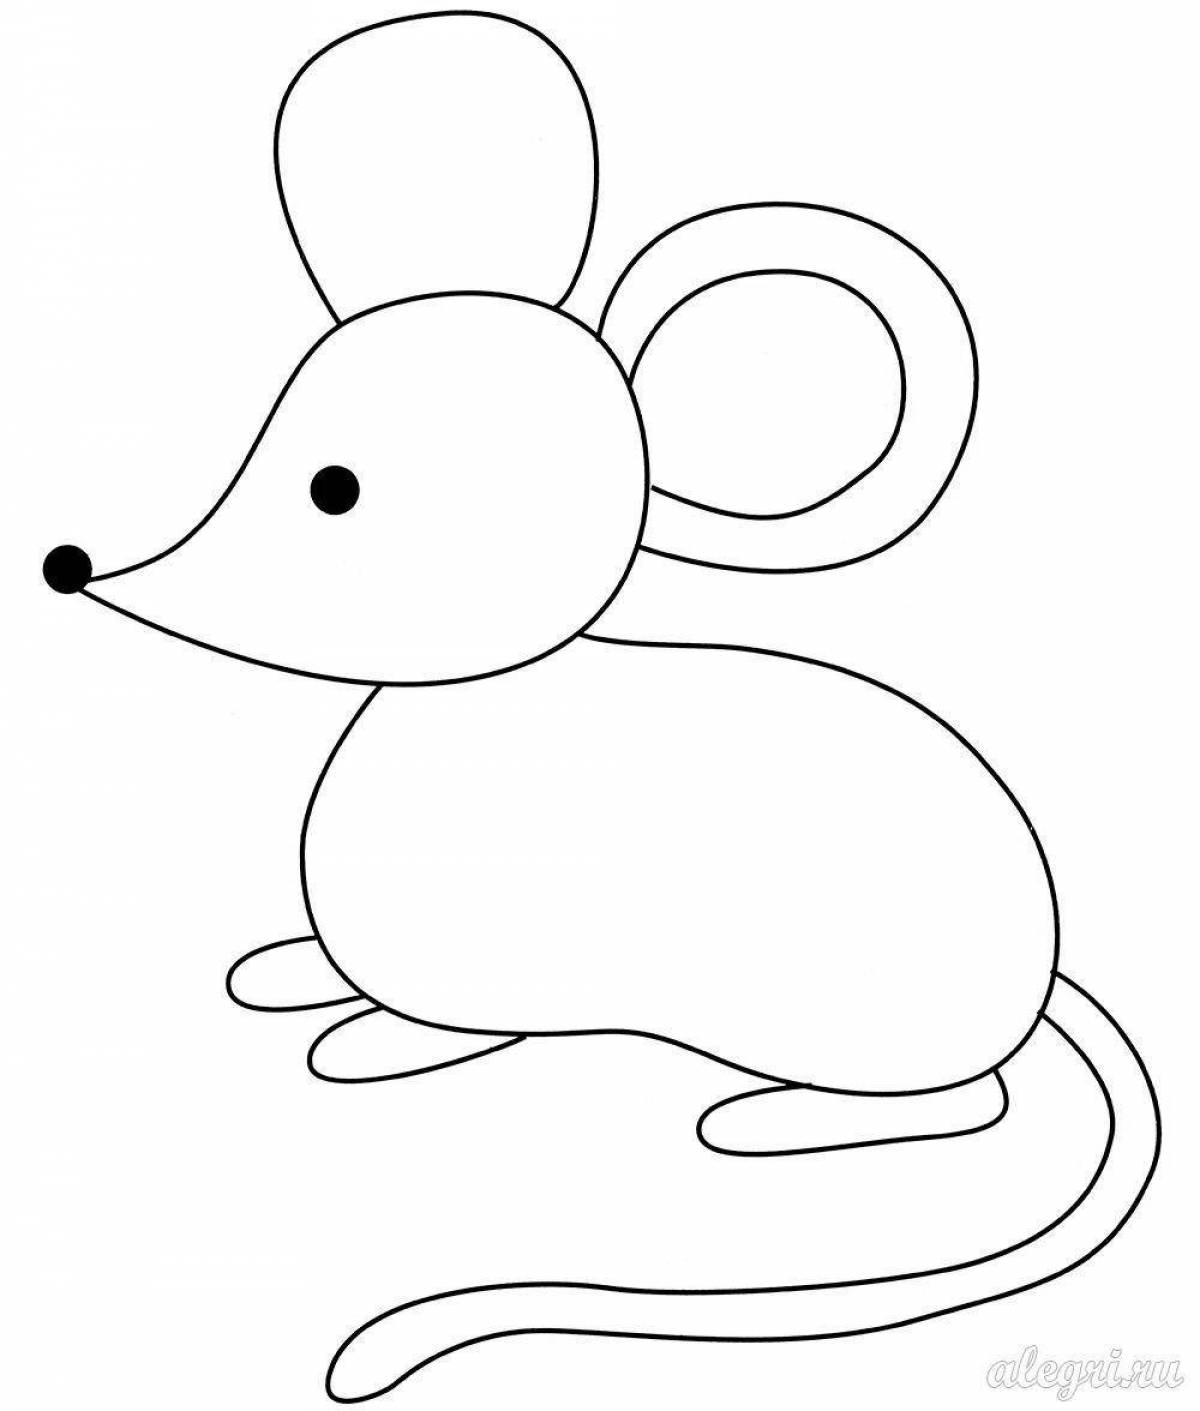 Color-explosion mouse coloring page для детей 3-4 лет